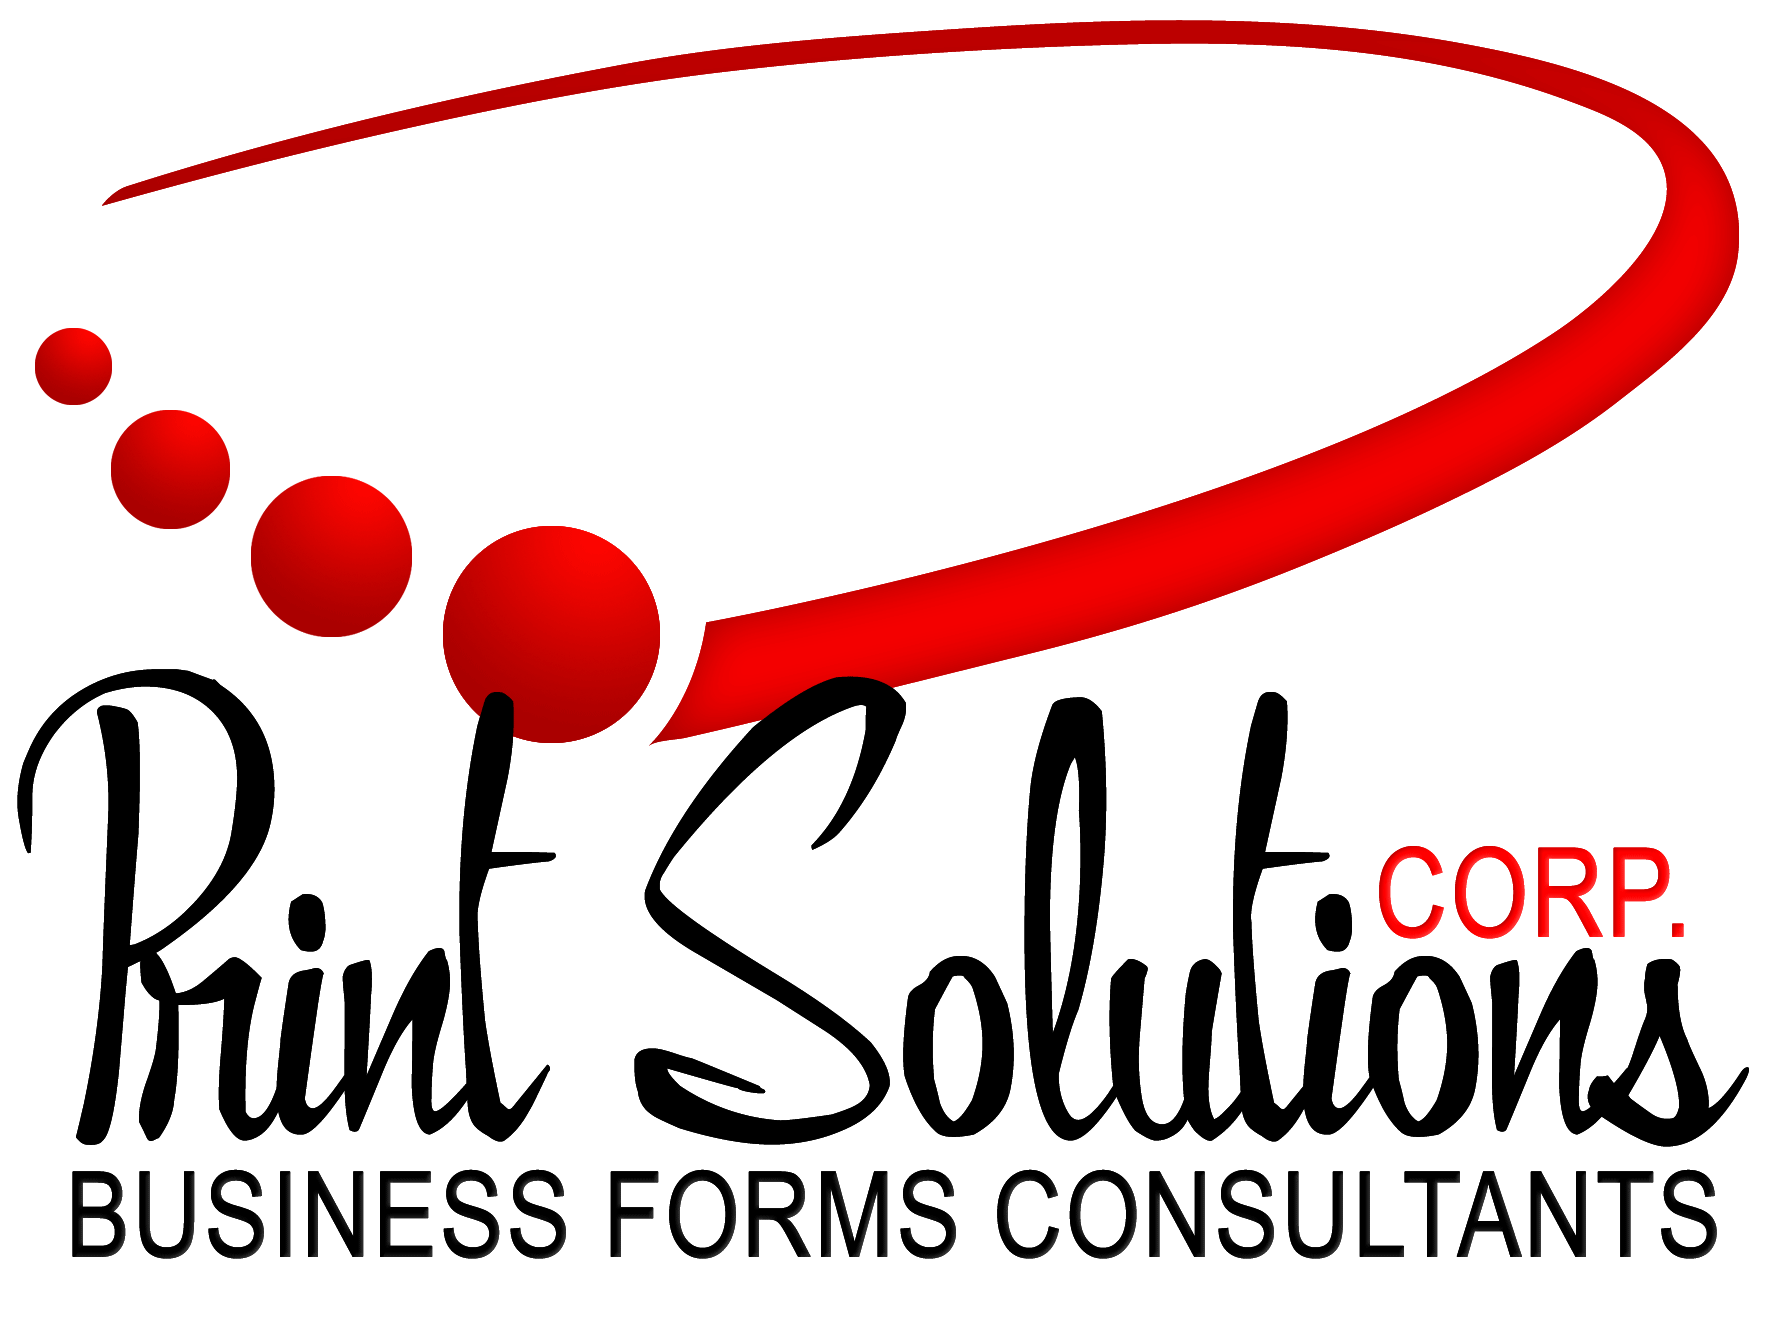 Print Solutions